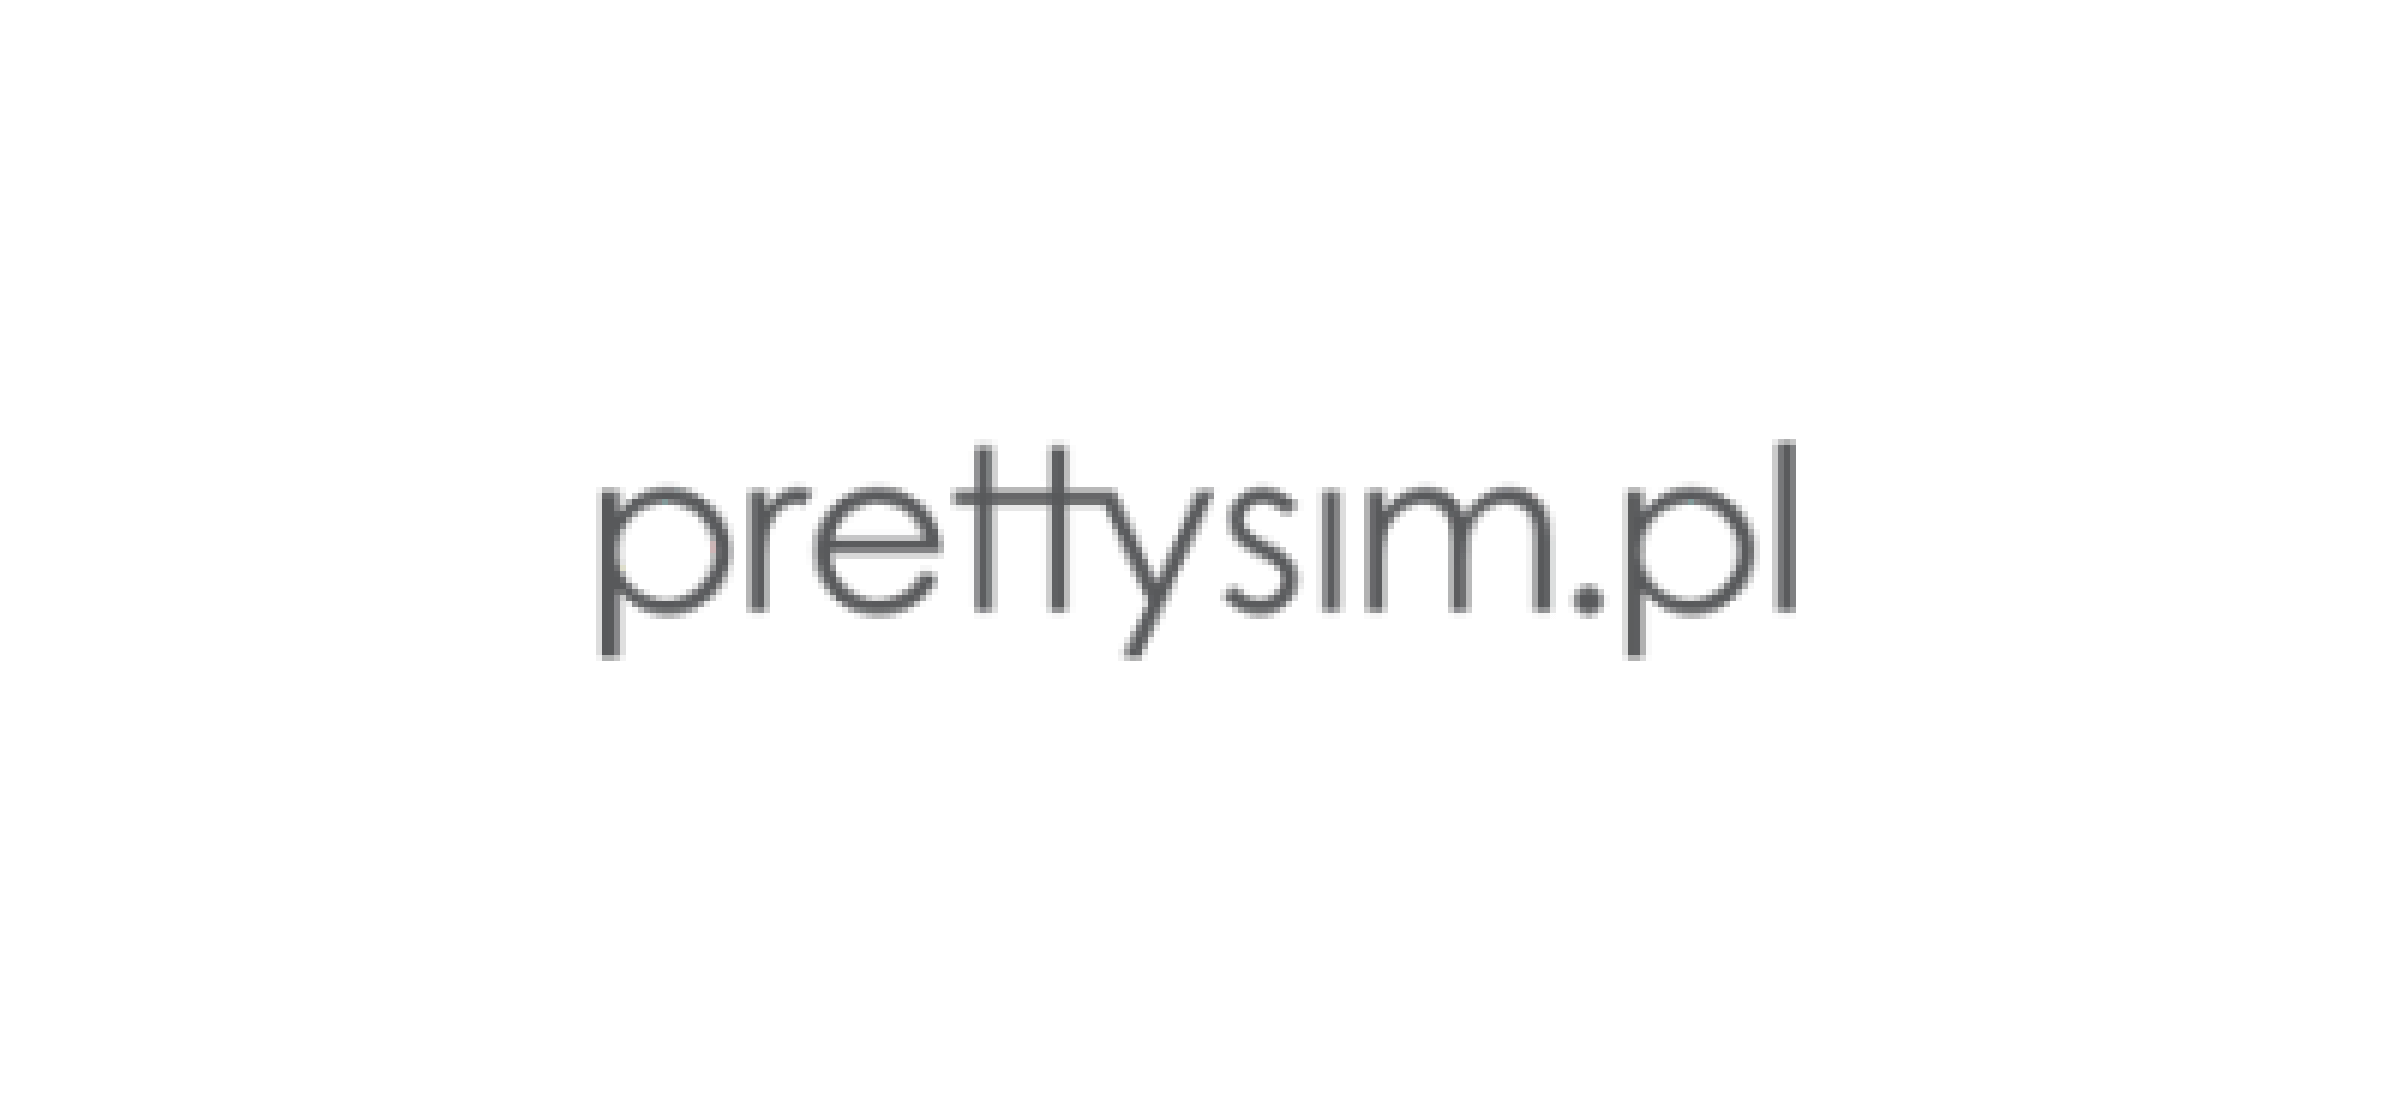 The Prettysim.pl logo